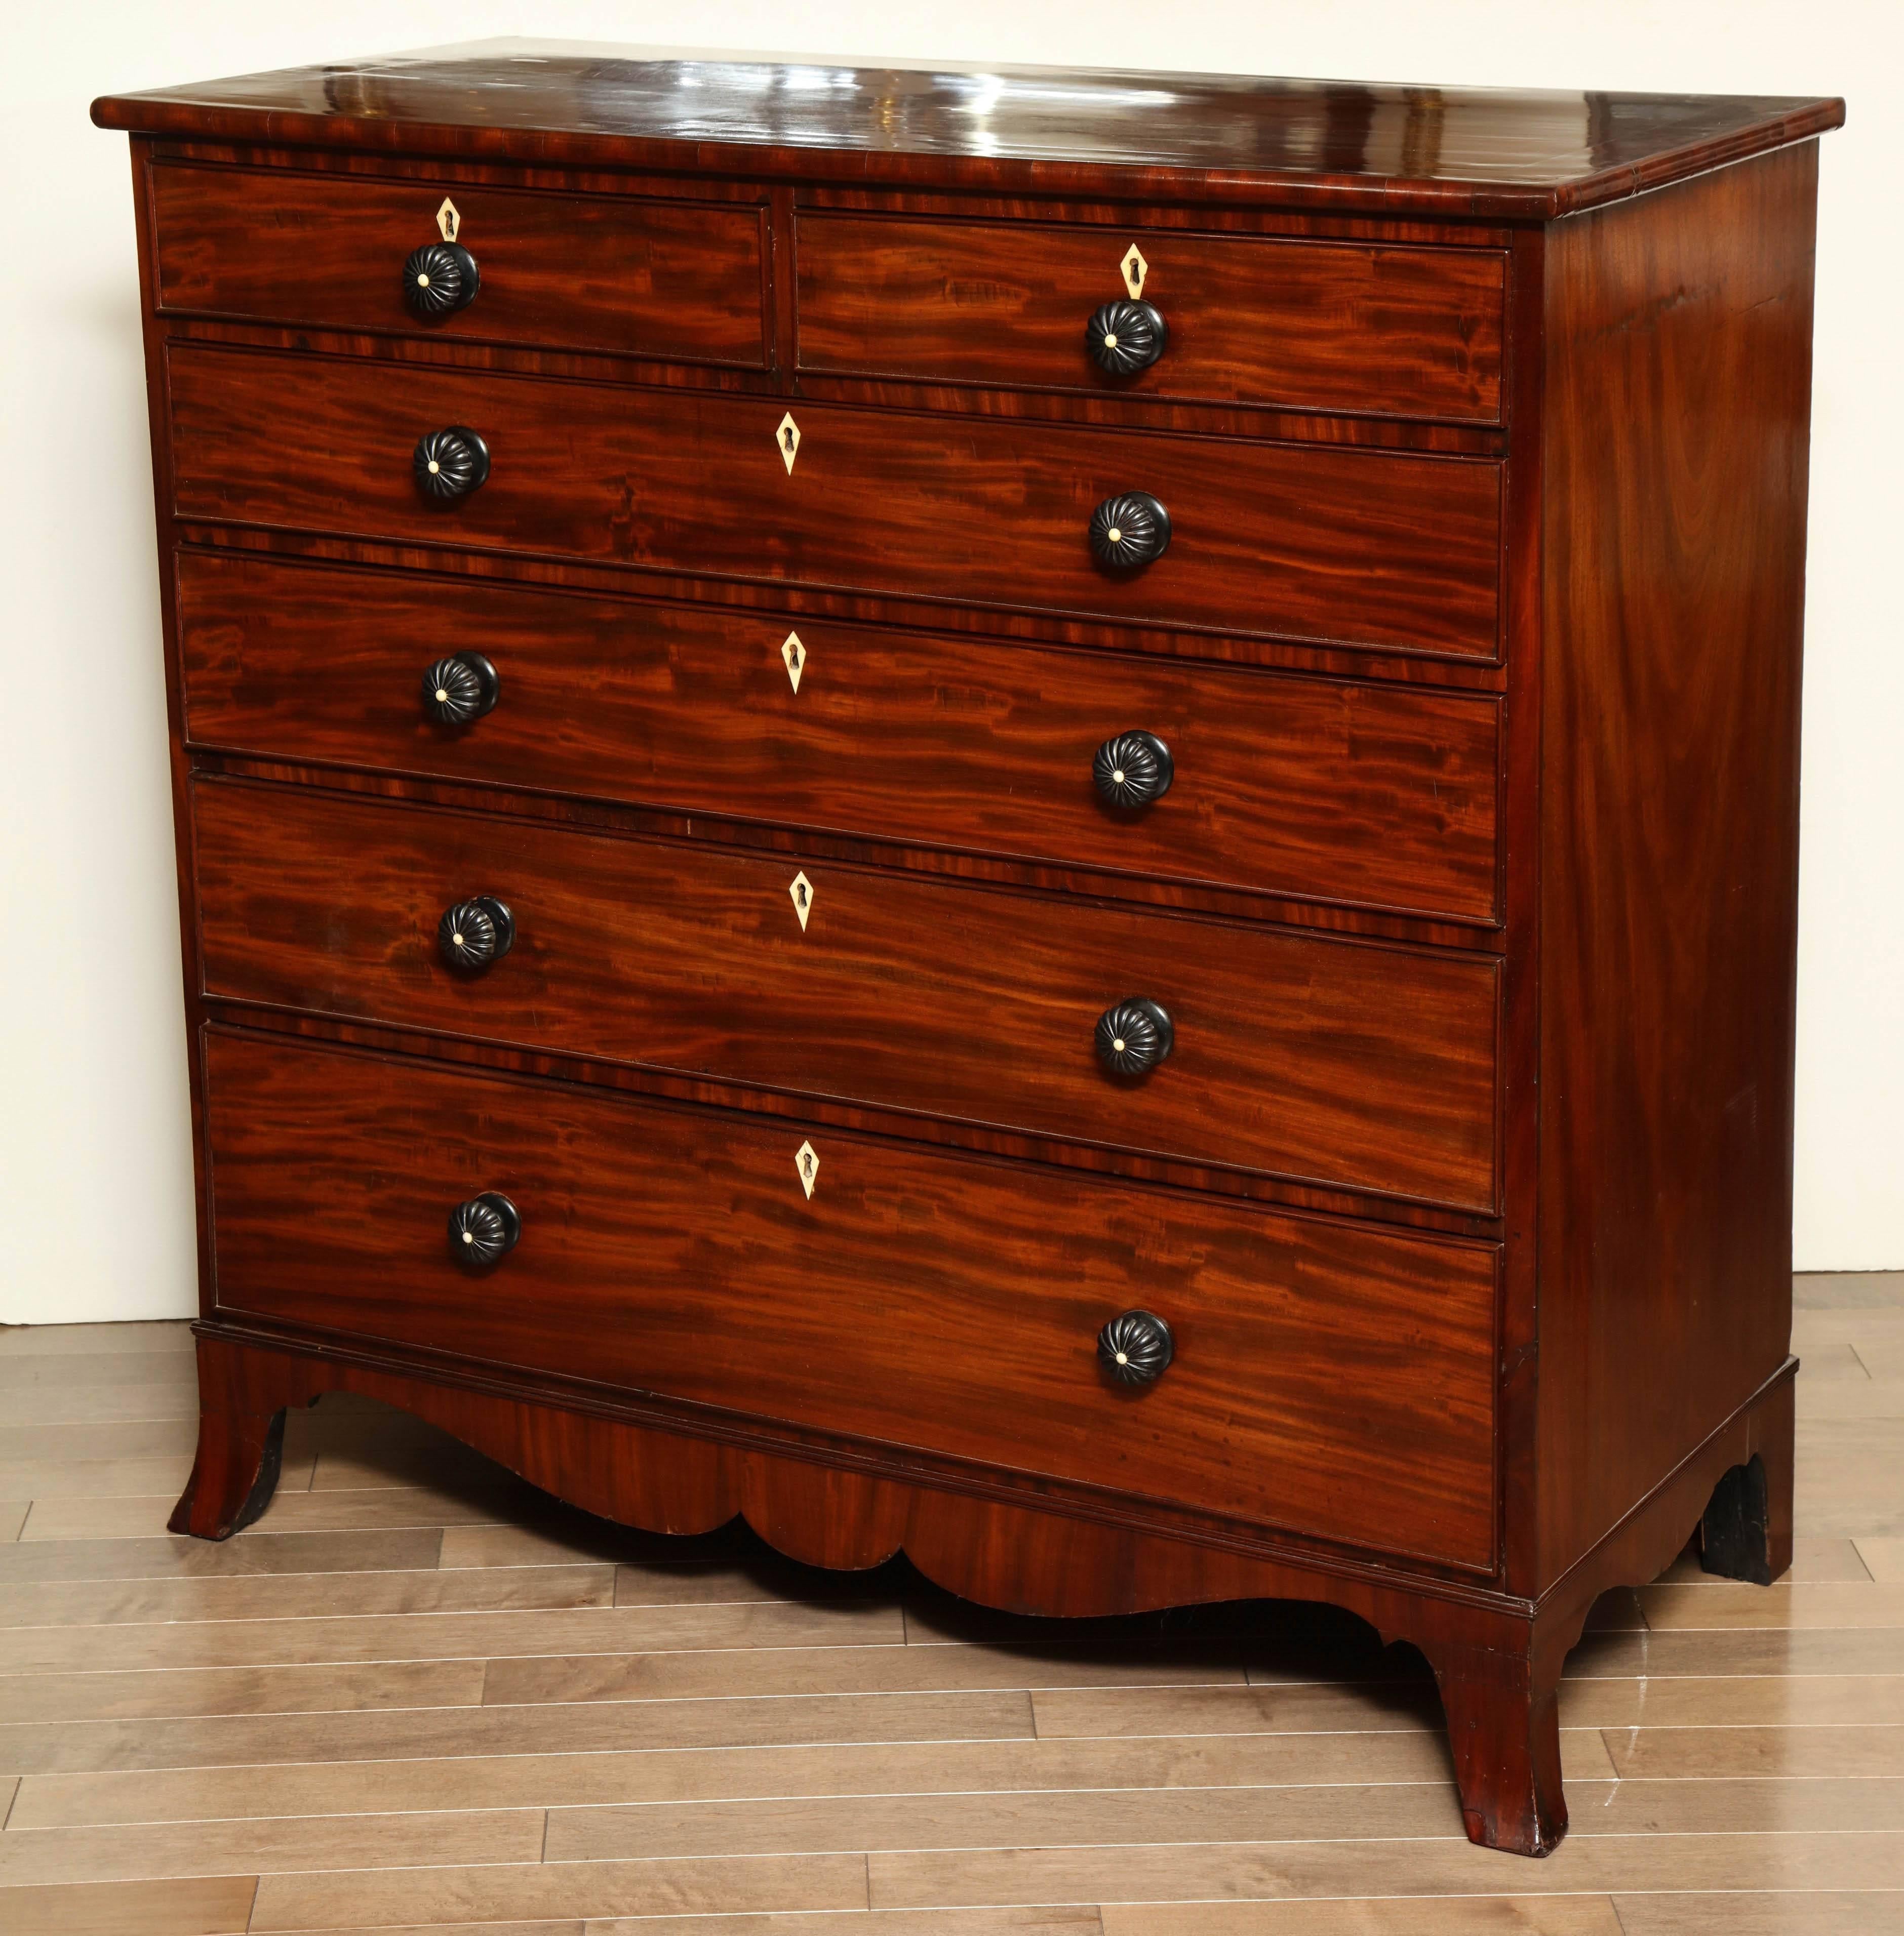 Early 19th century English Regency, mahogany, six drawer chest.